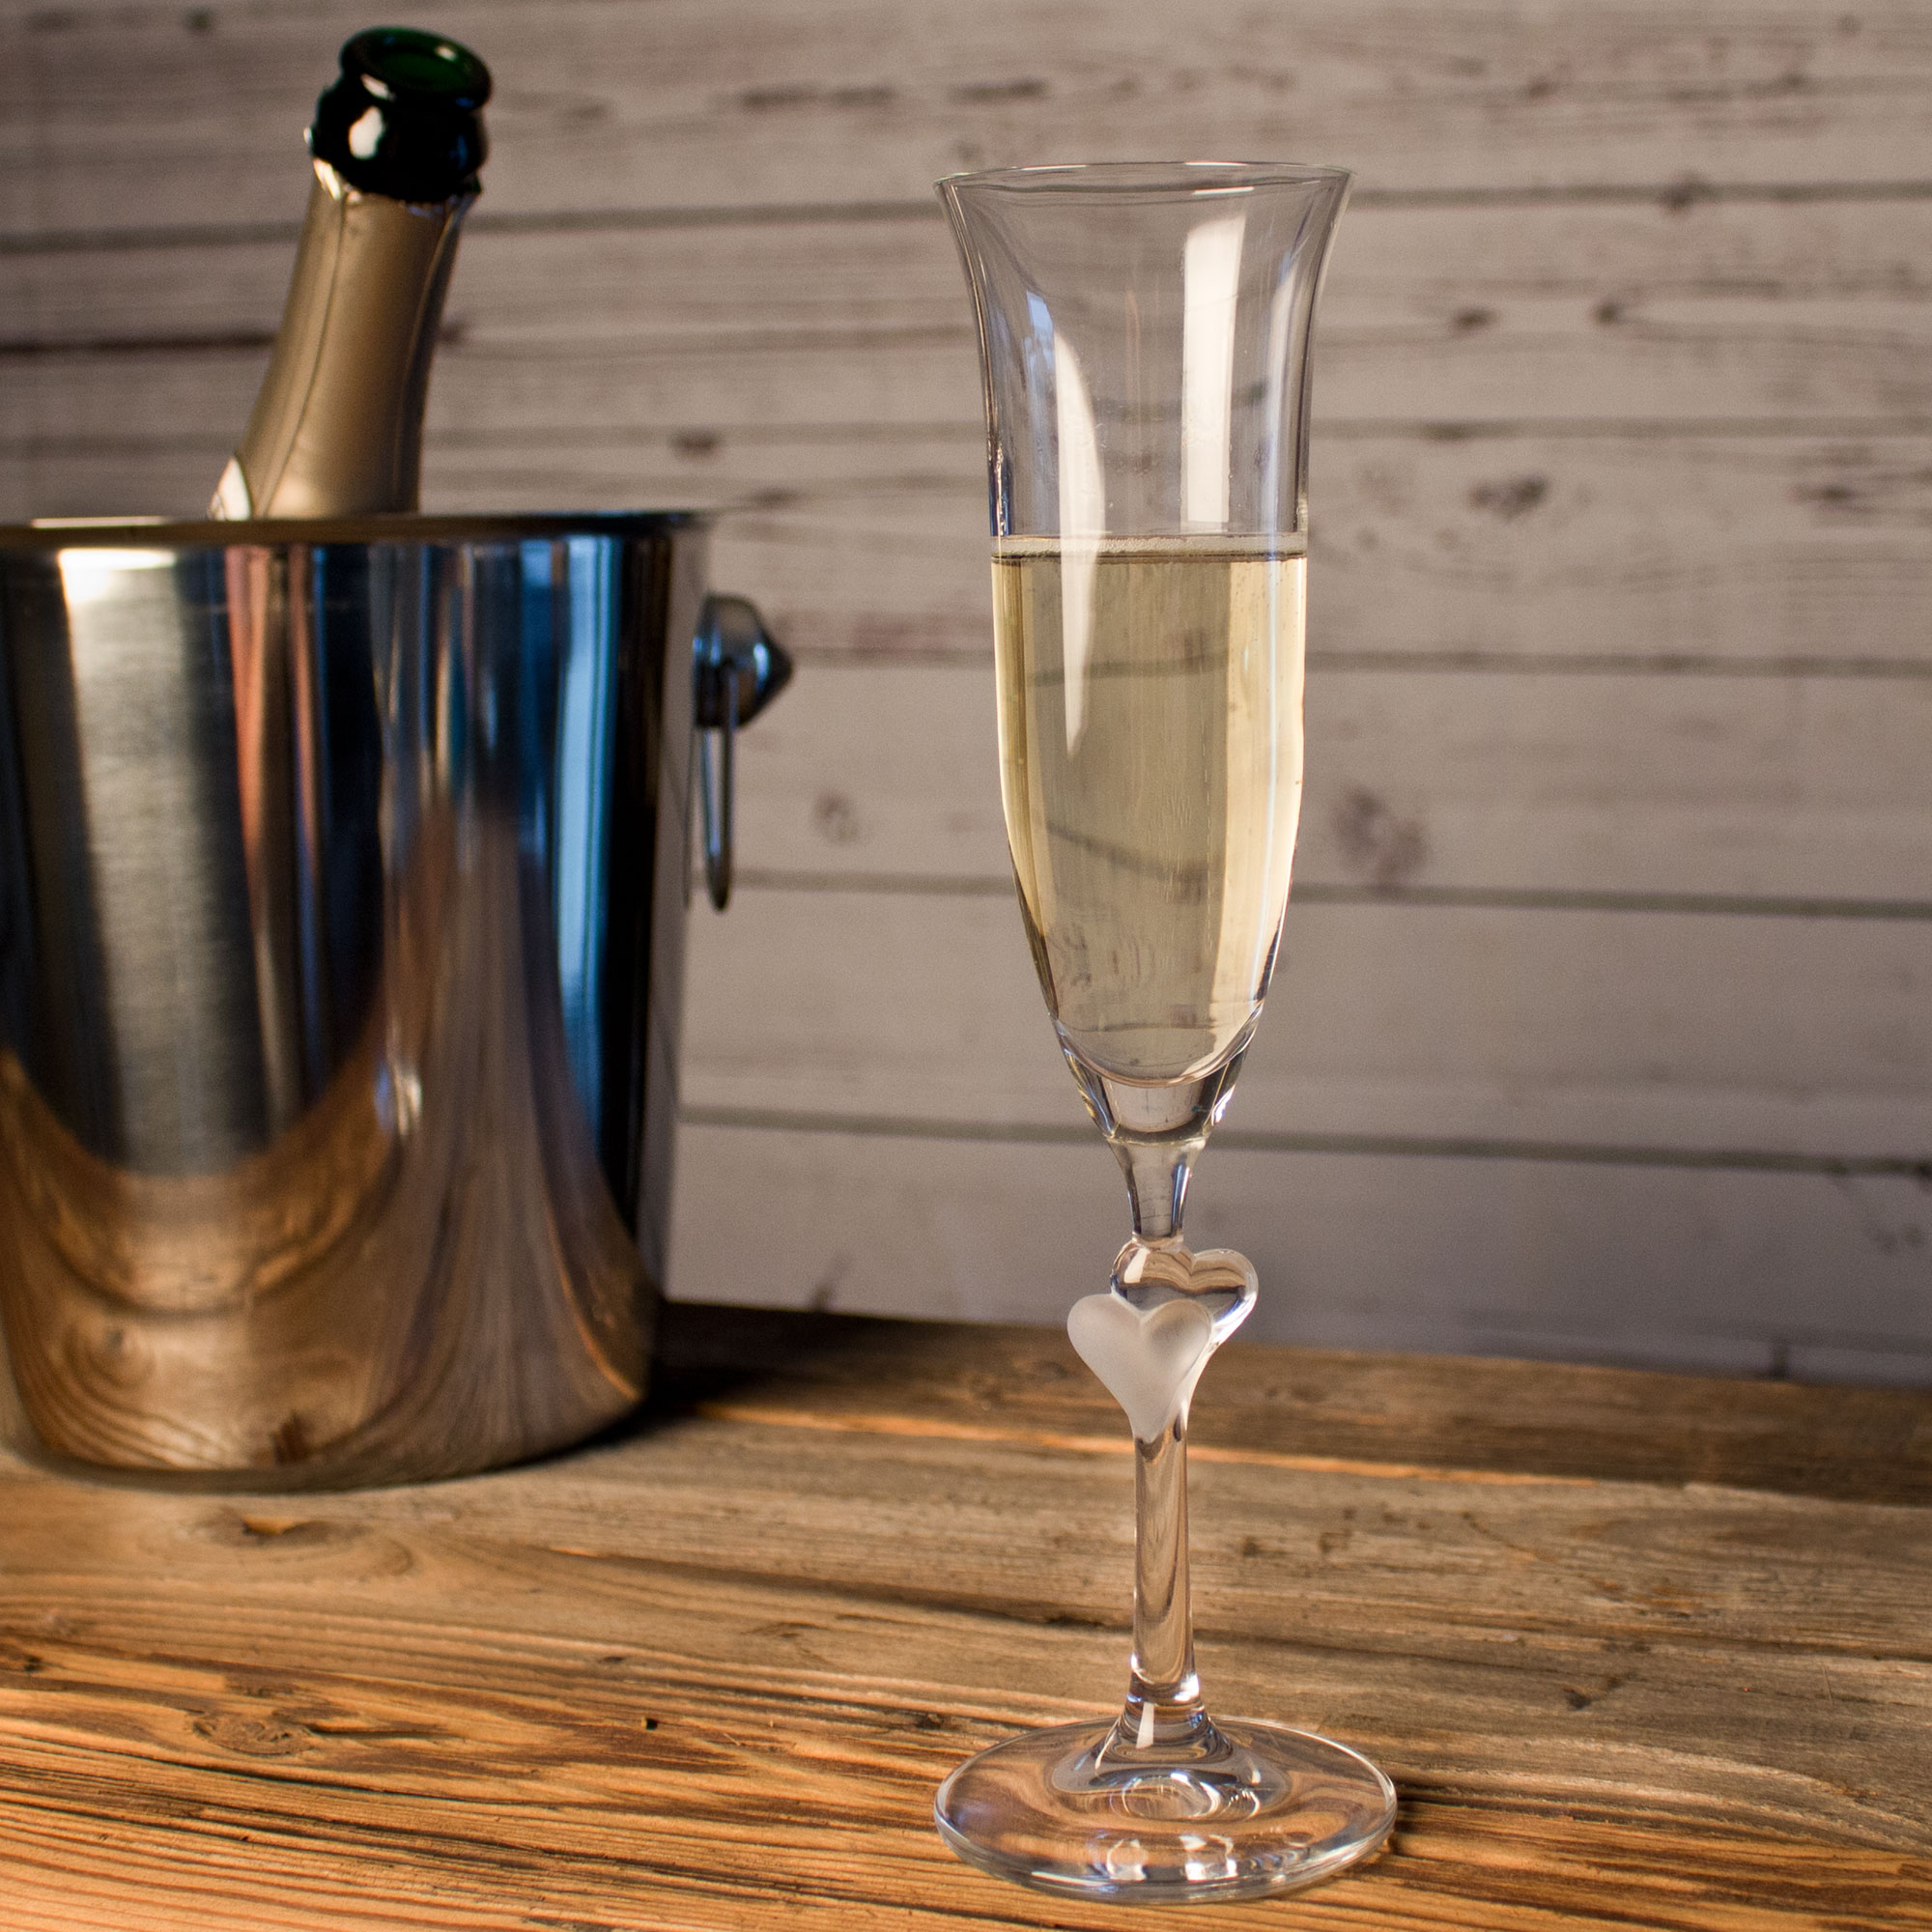 Champagne glass satin L'Amour, Stölzle - 175ml (1 pc.)